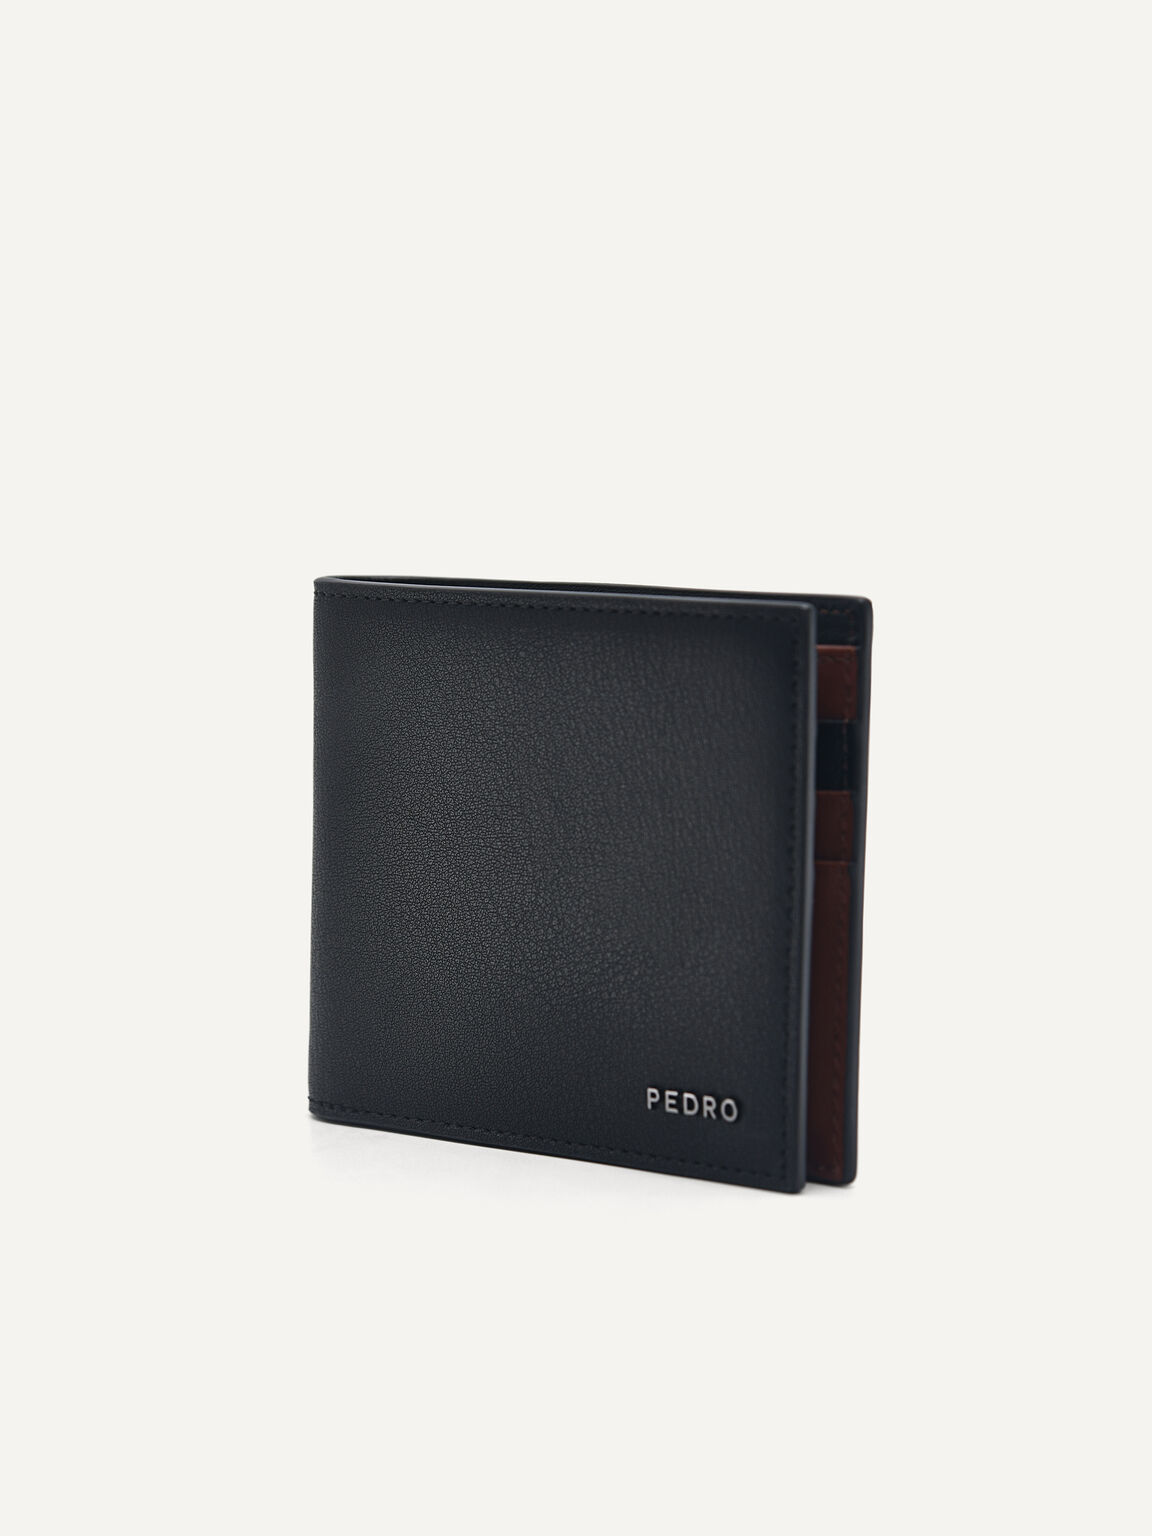 Leather Bi-Fold Wallet, Black